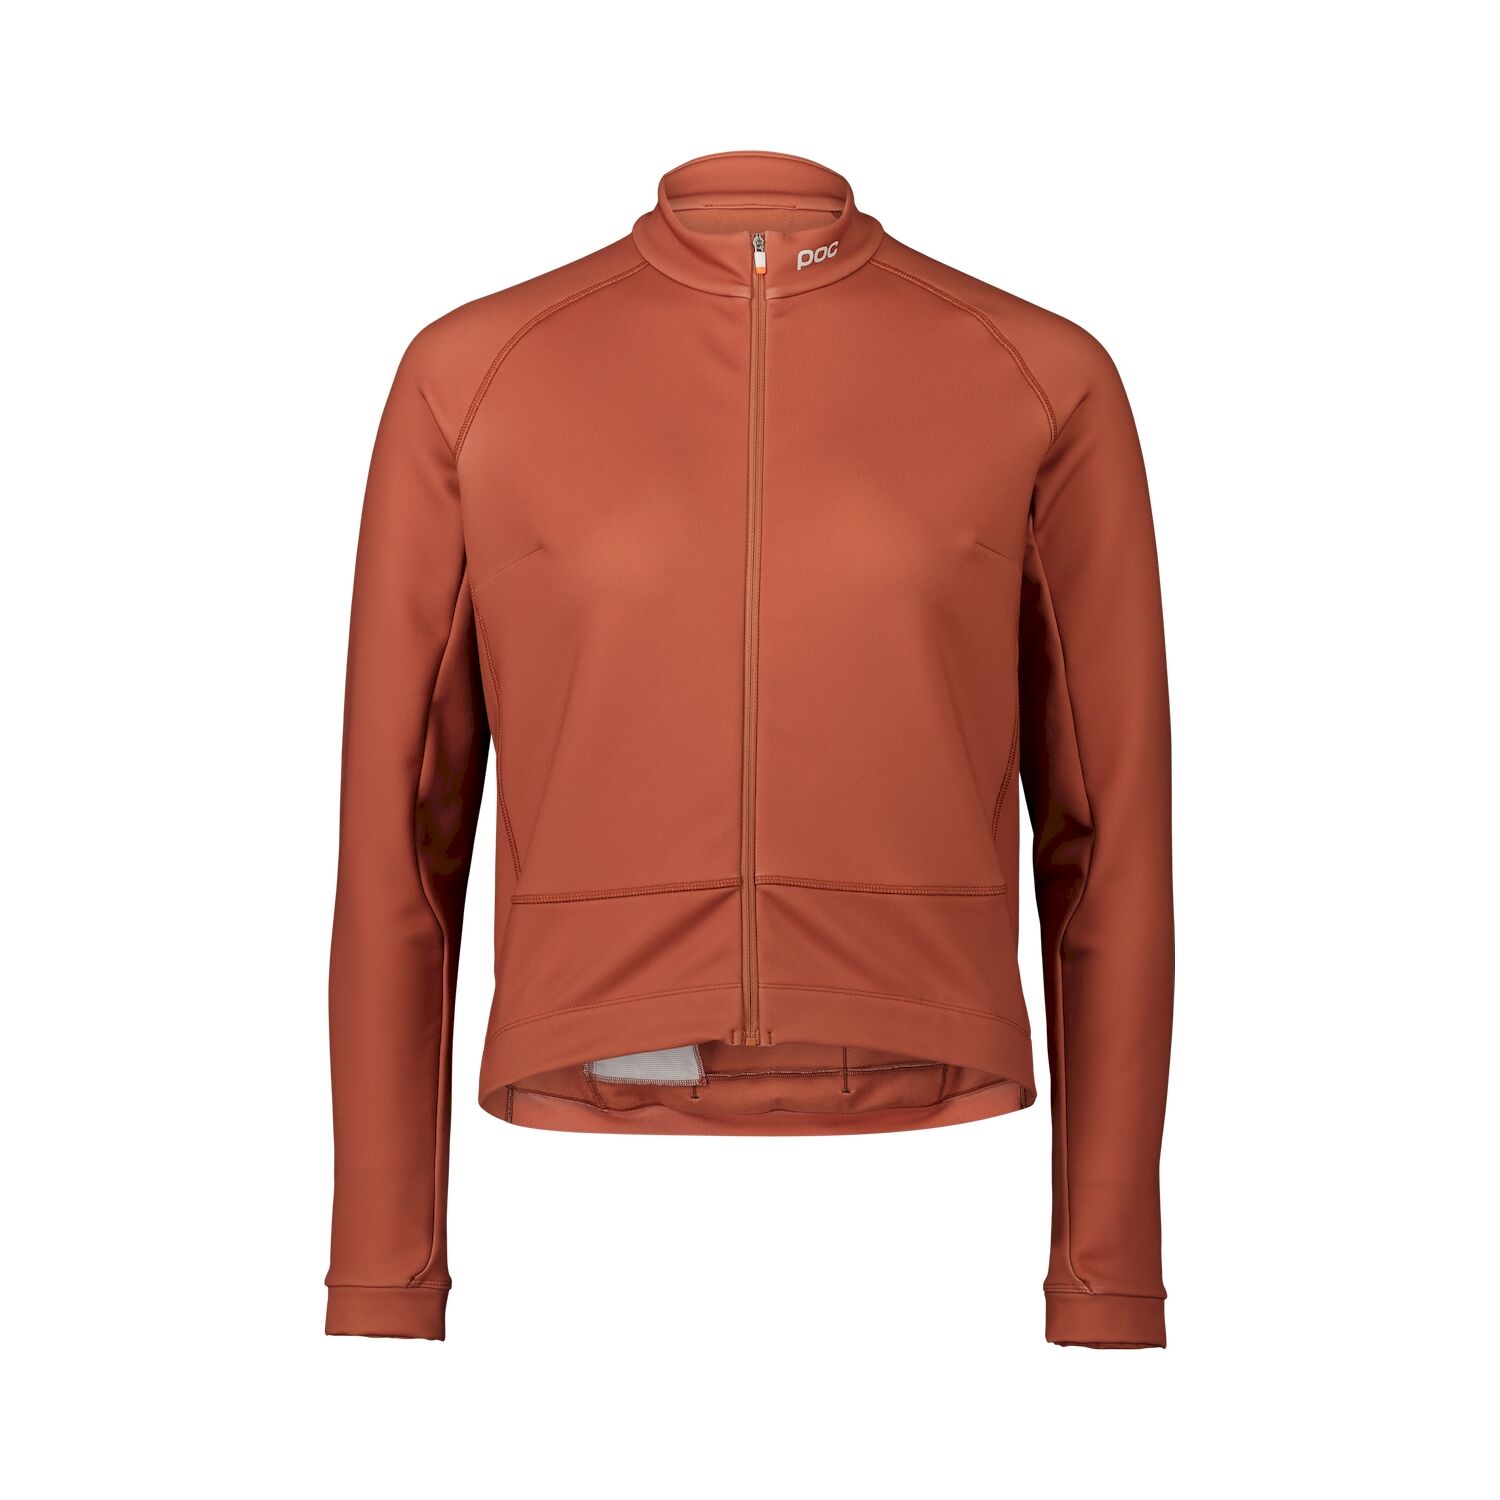 Poc Thermal Jacket - Cycling jacket - Women's